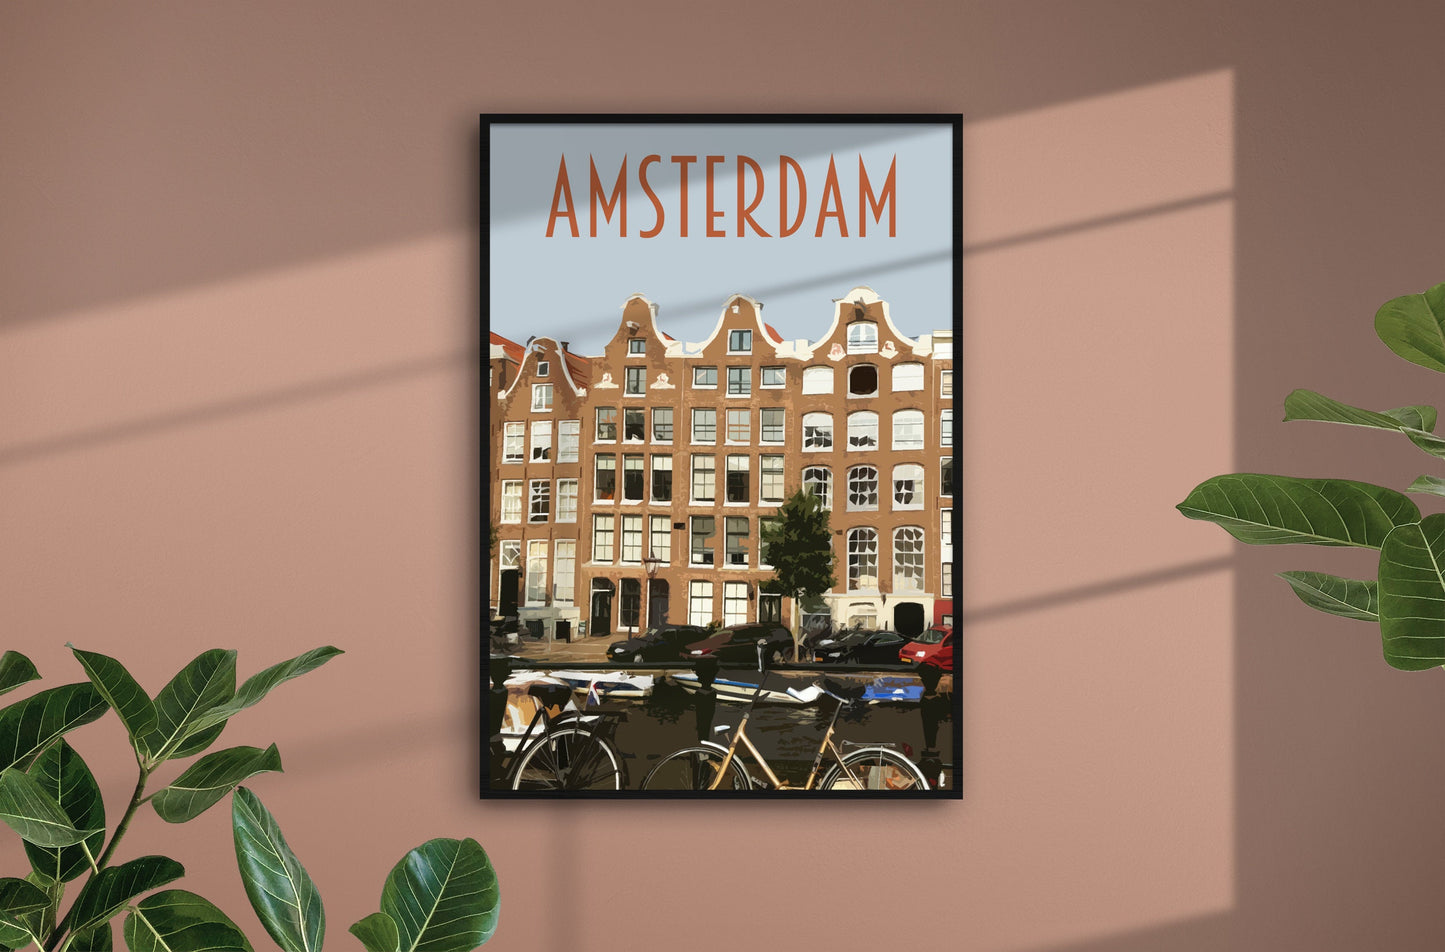 Amsterdam Travel Poster